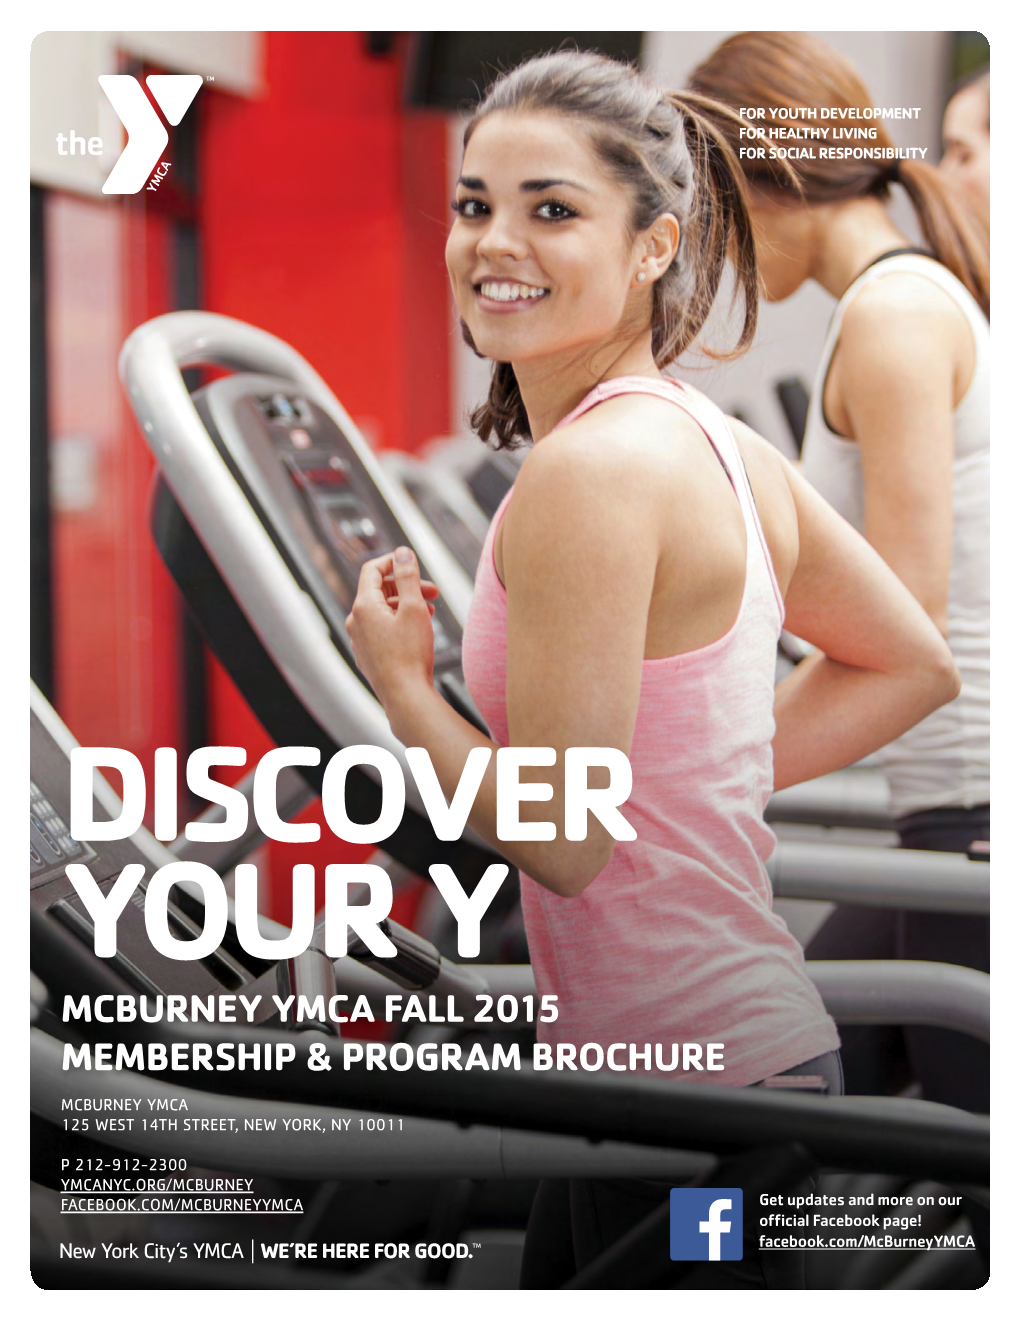 Mcburney Ymca Fall 2015 Membership & Program